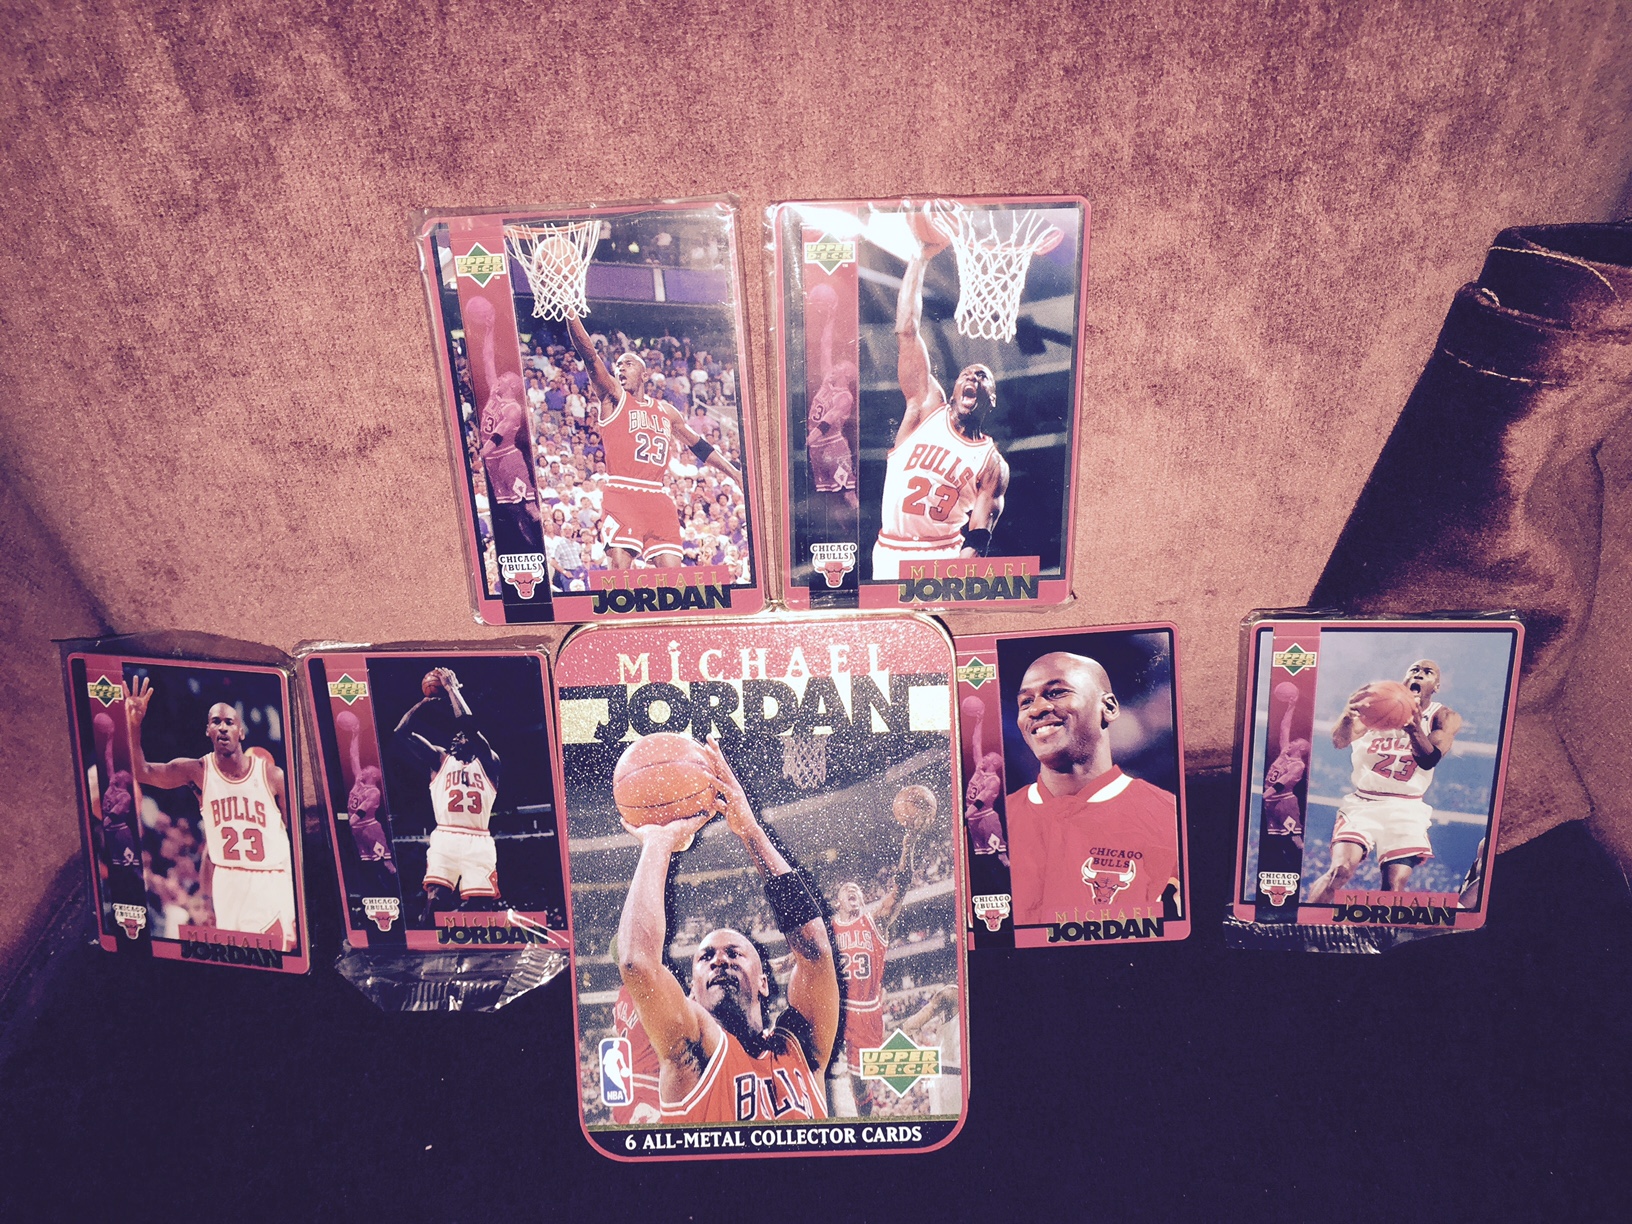 Michael Jordan Collector cards